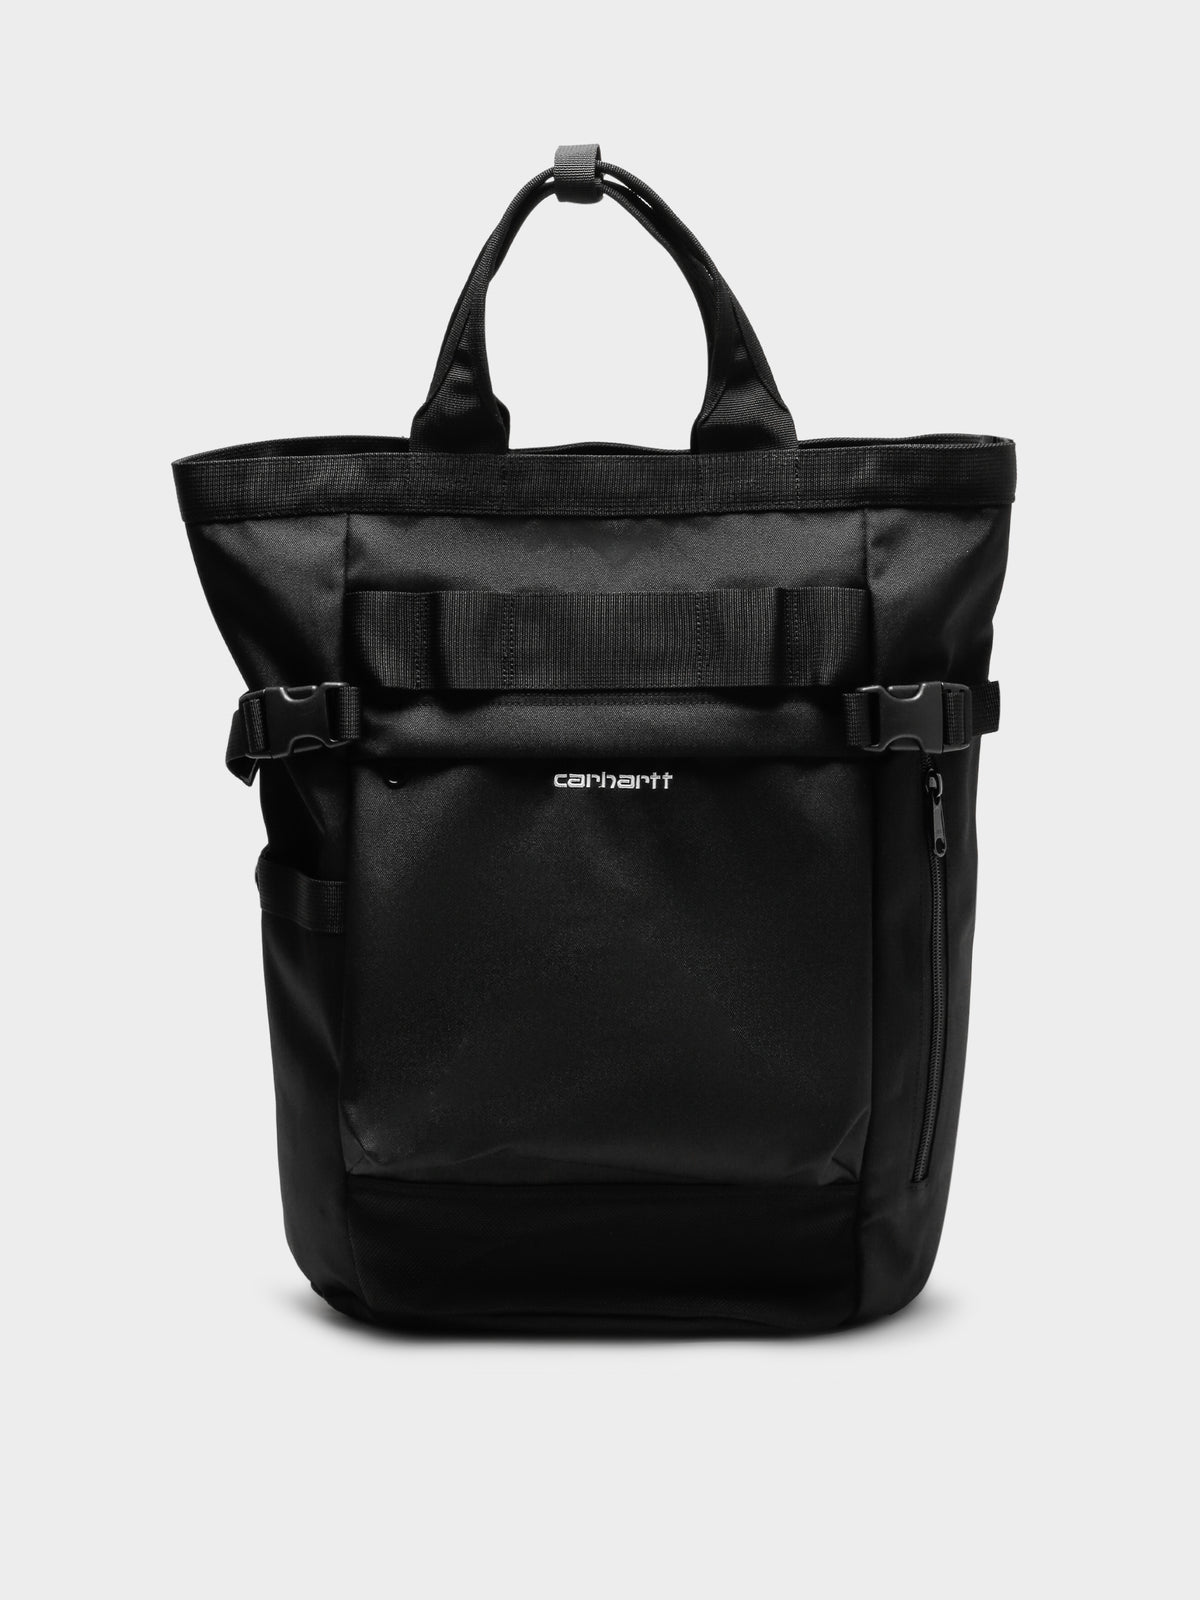 Payton Carrier Bag in Black